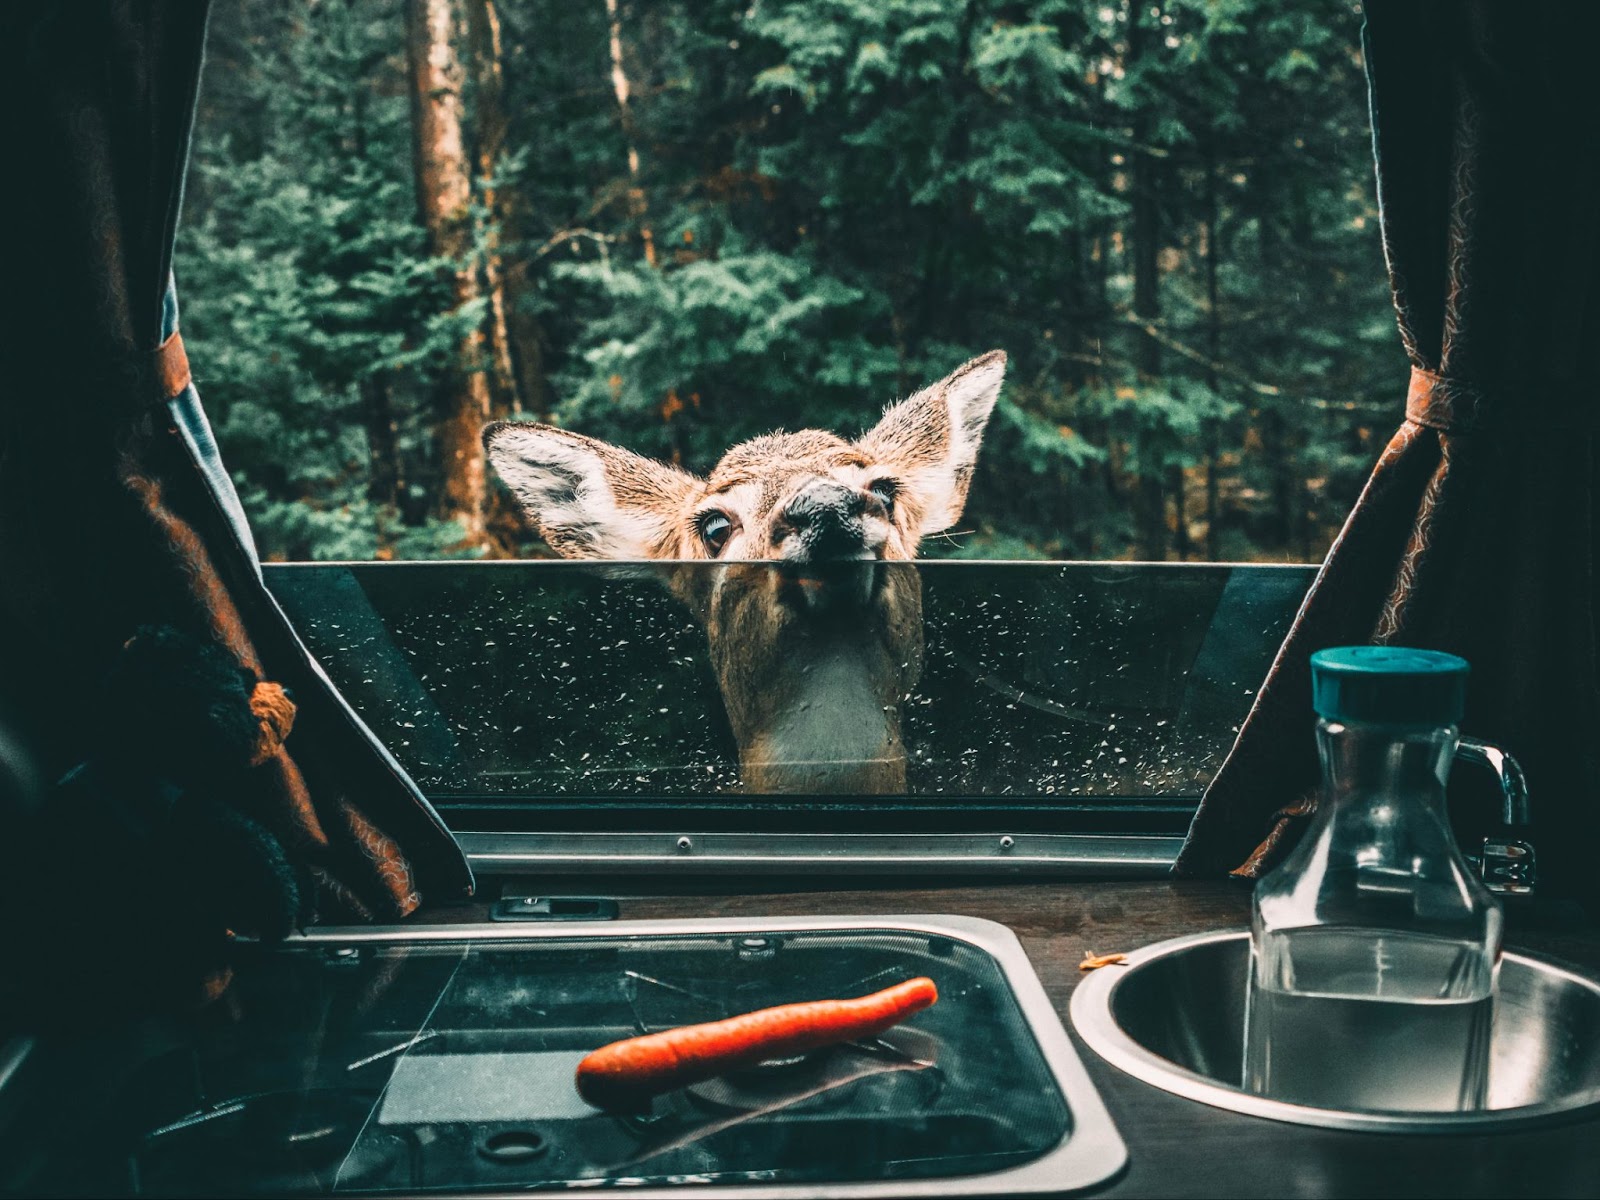 Deer looking into campervan